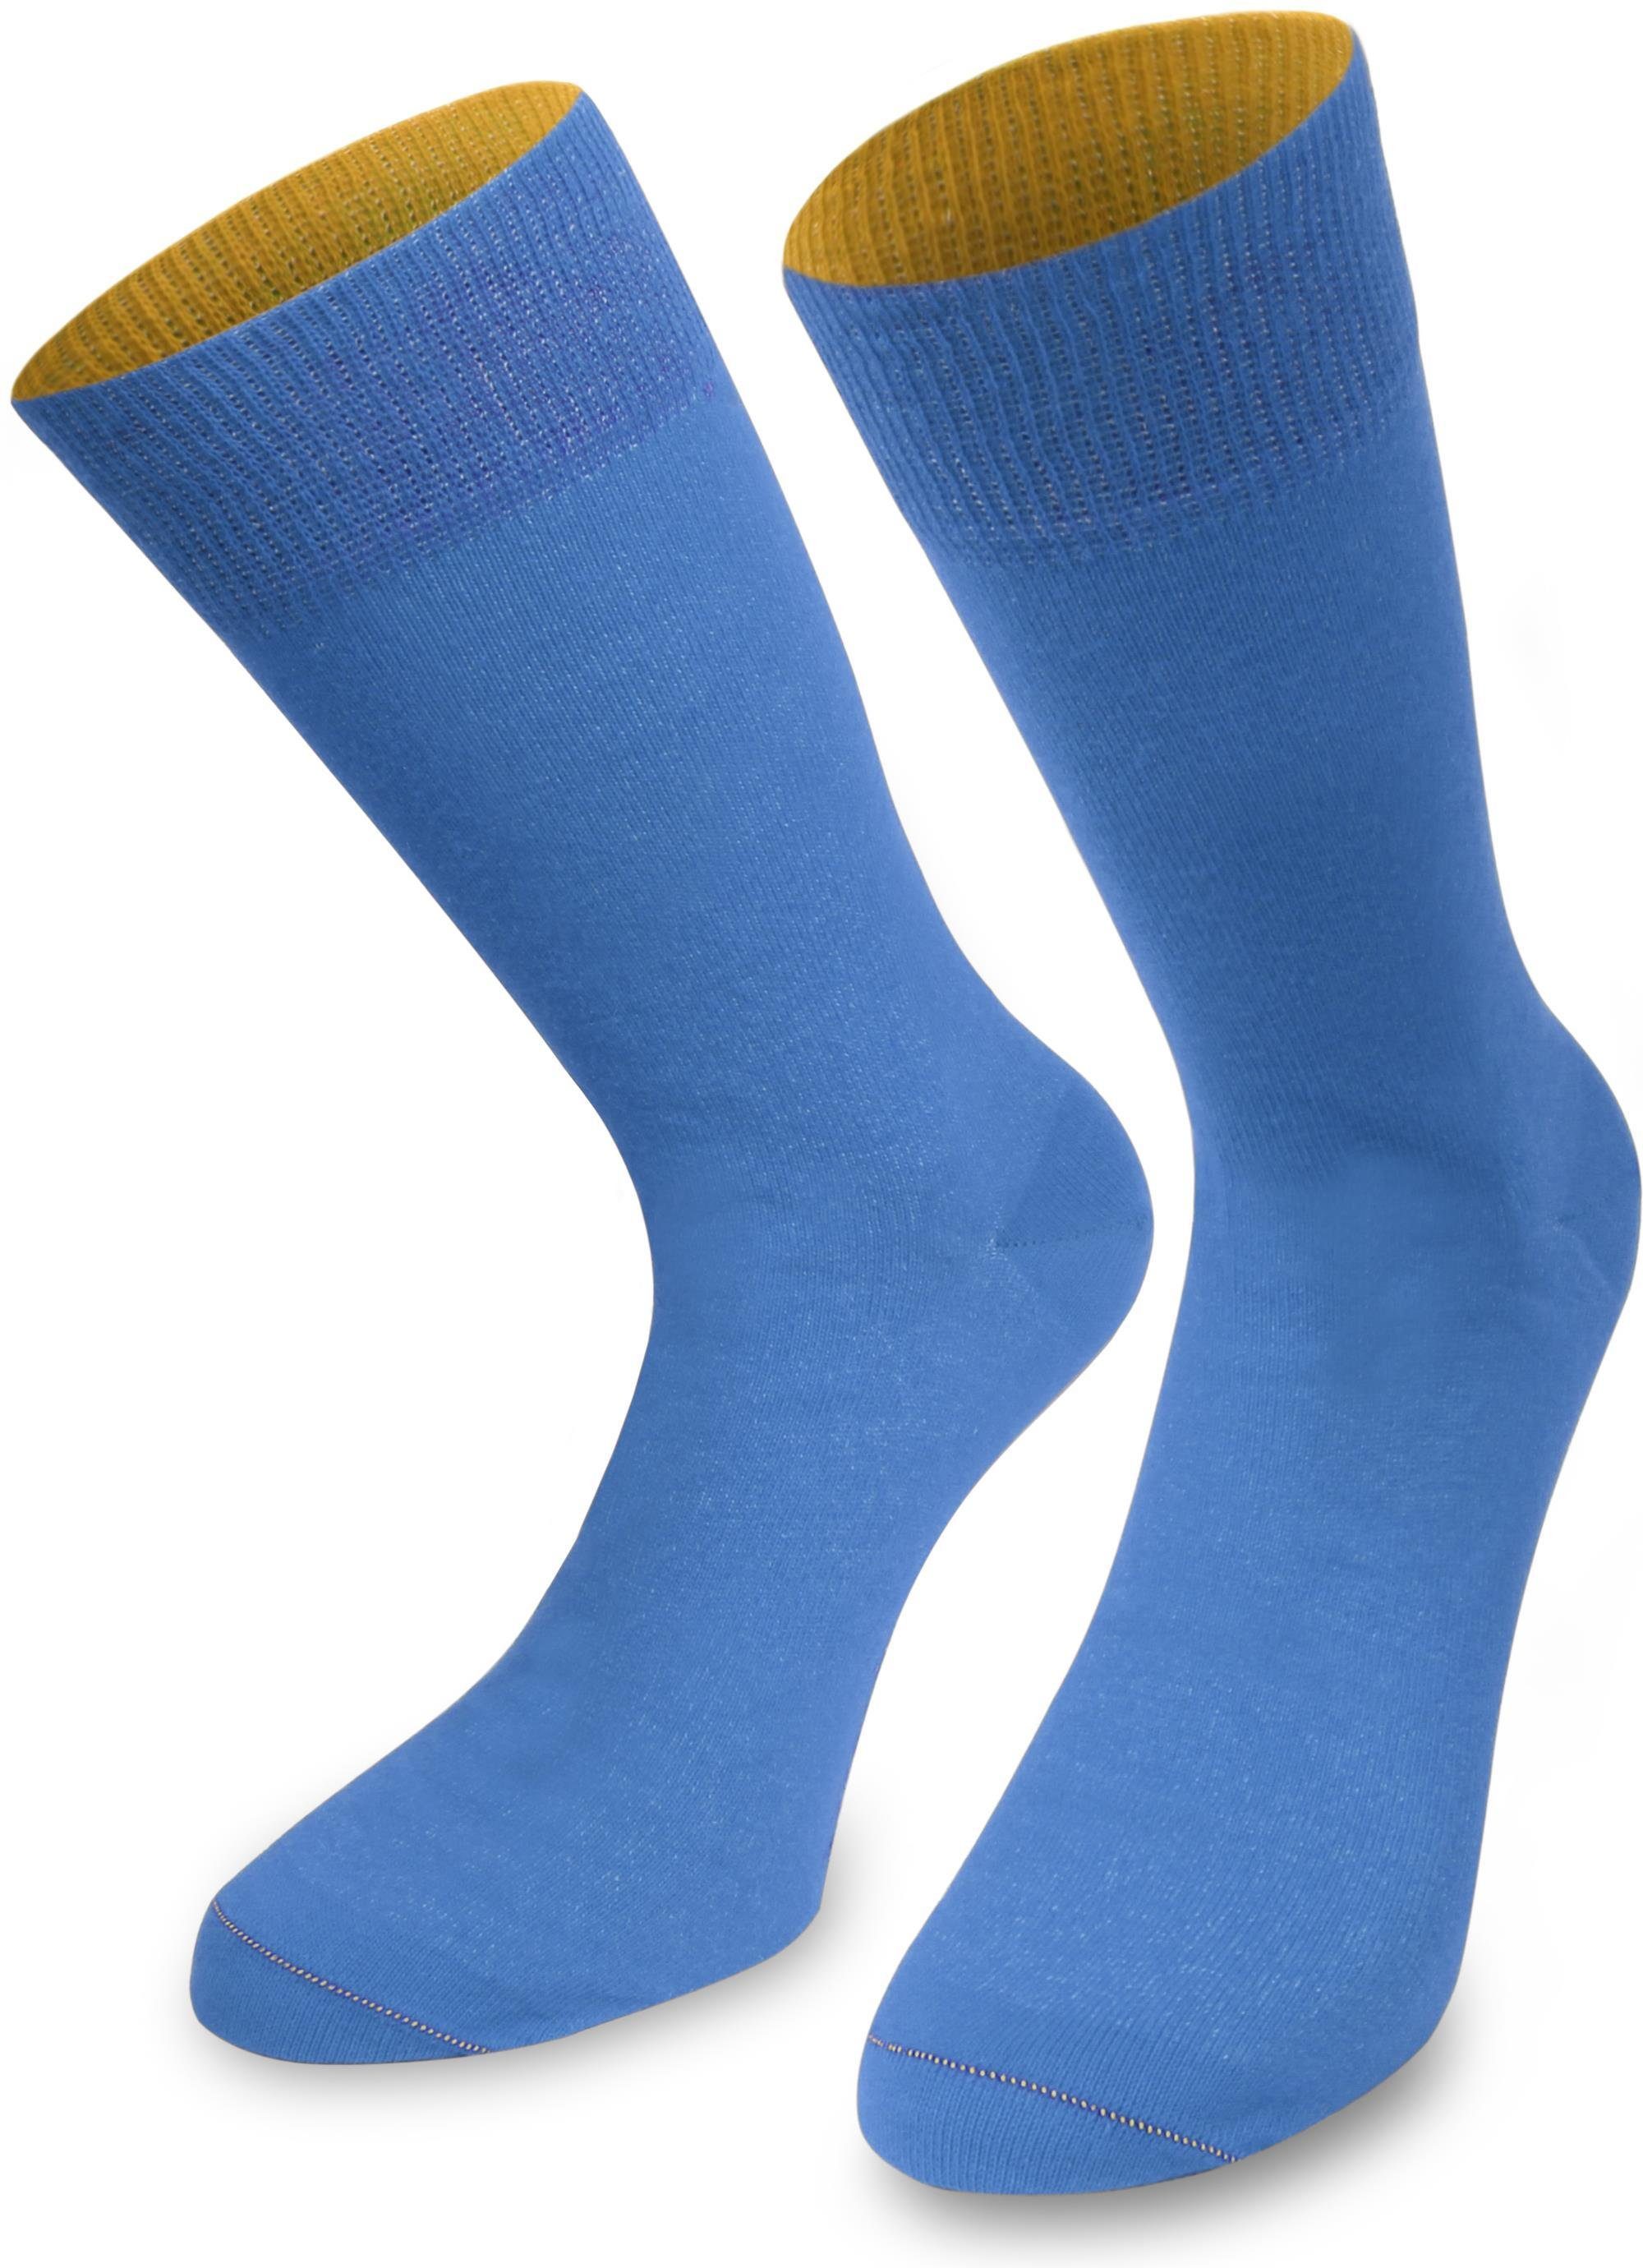 normani Basicsocken 1 Paar Socken Bi-Color (1 Paar) farbig abgesetzter Bund Himmelblau/Aprikose